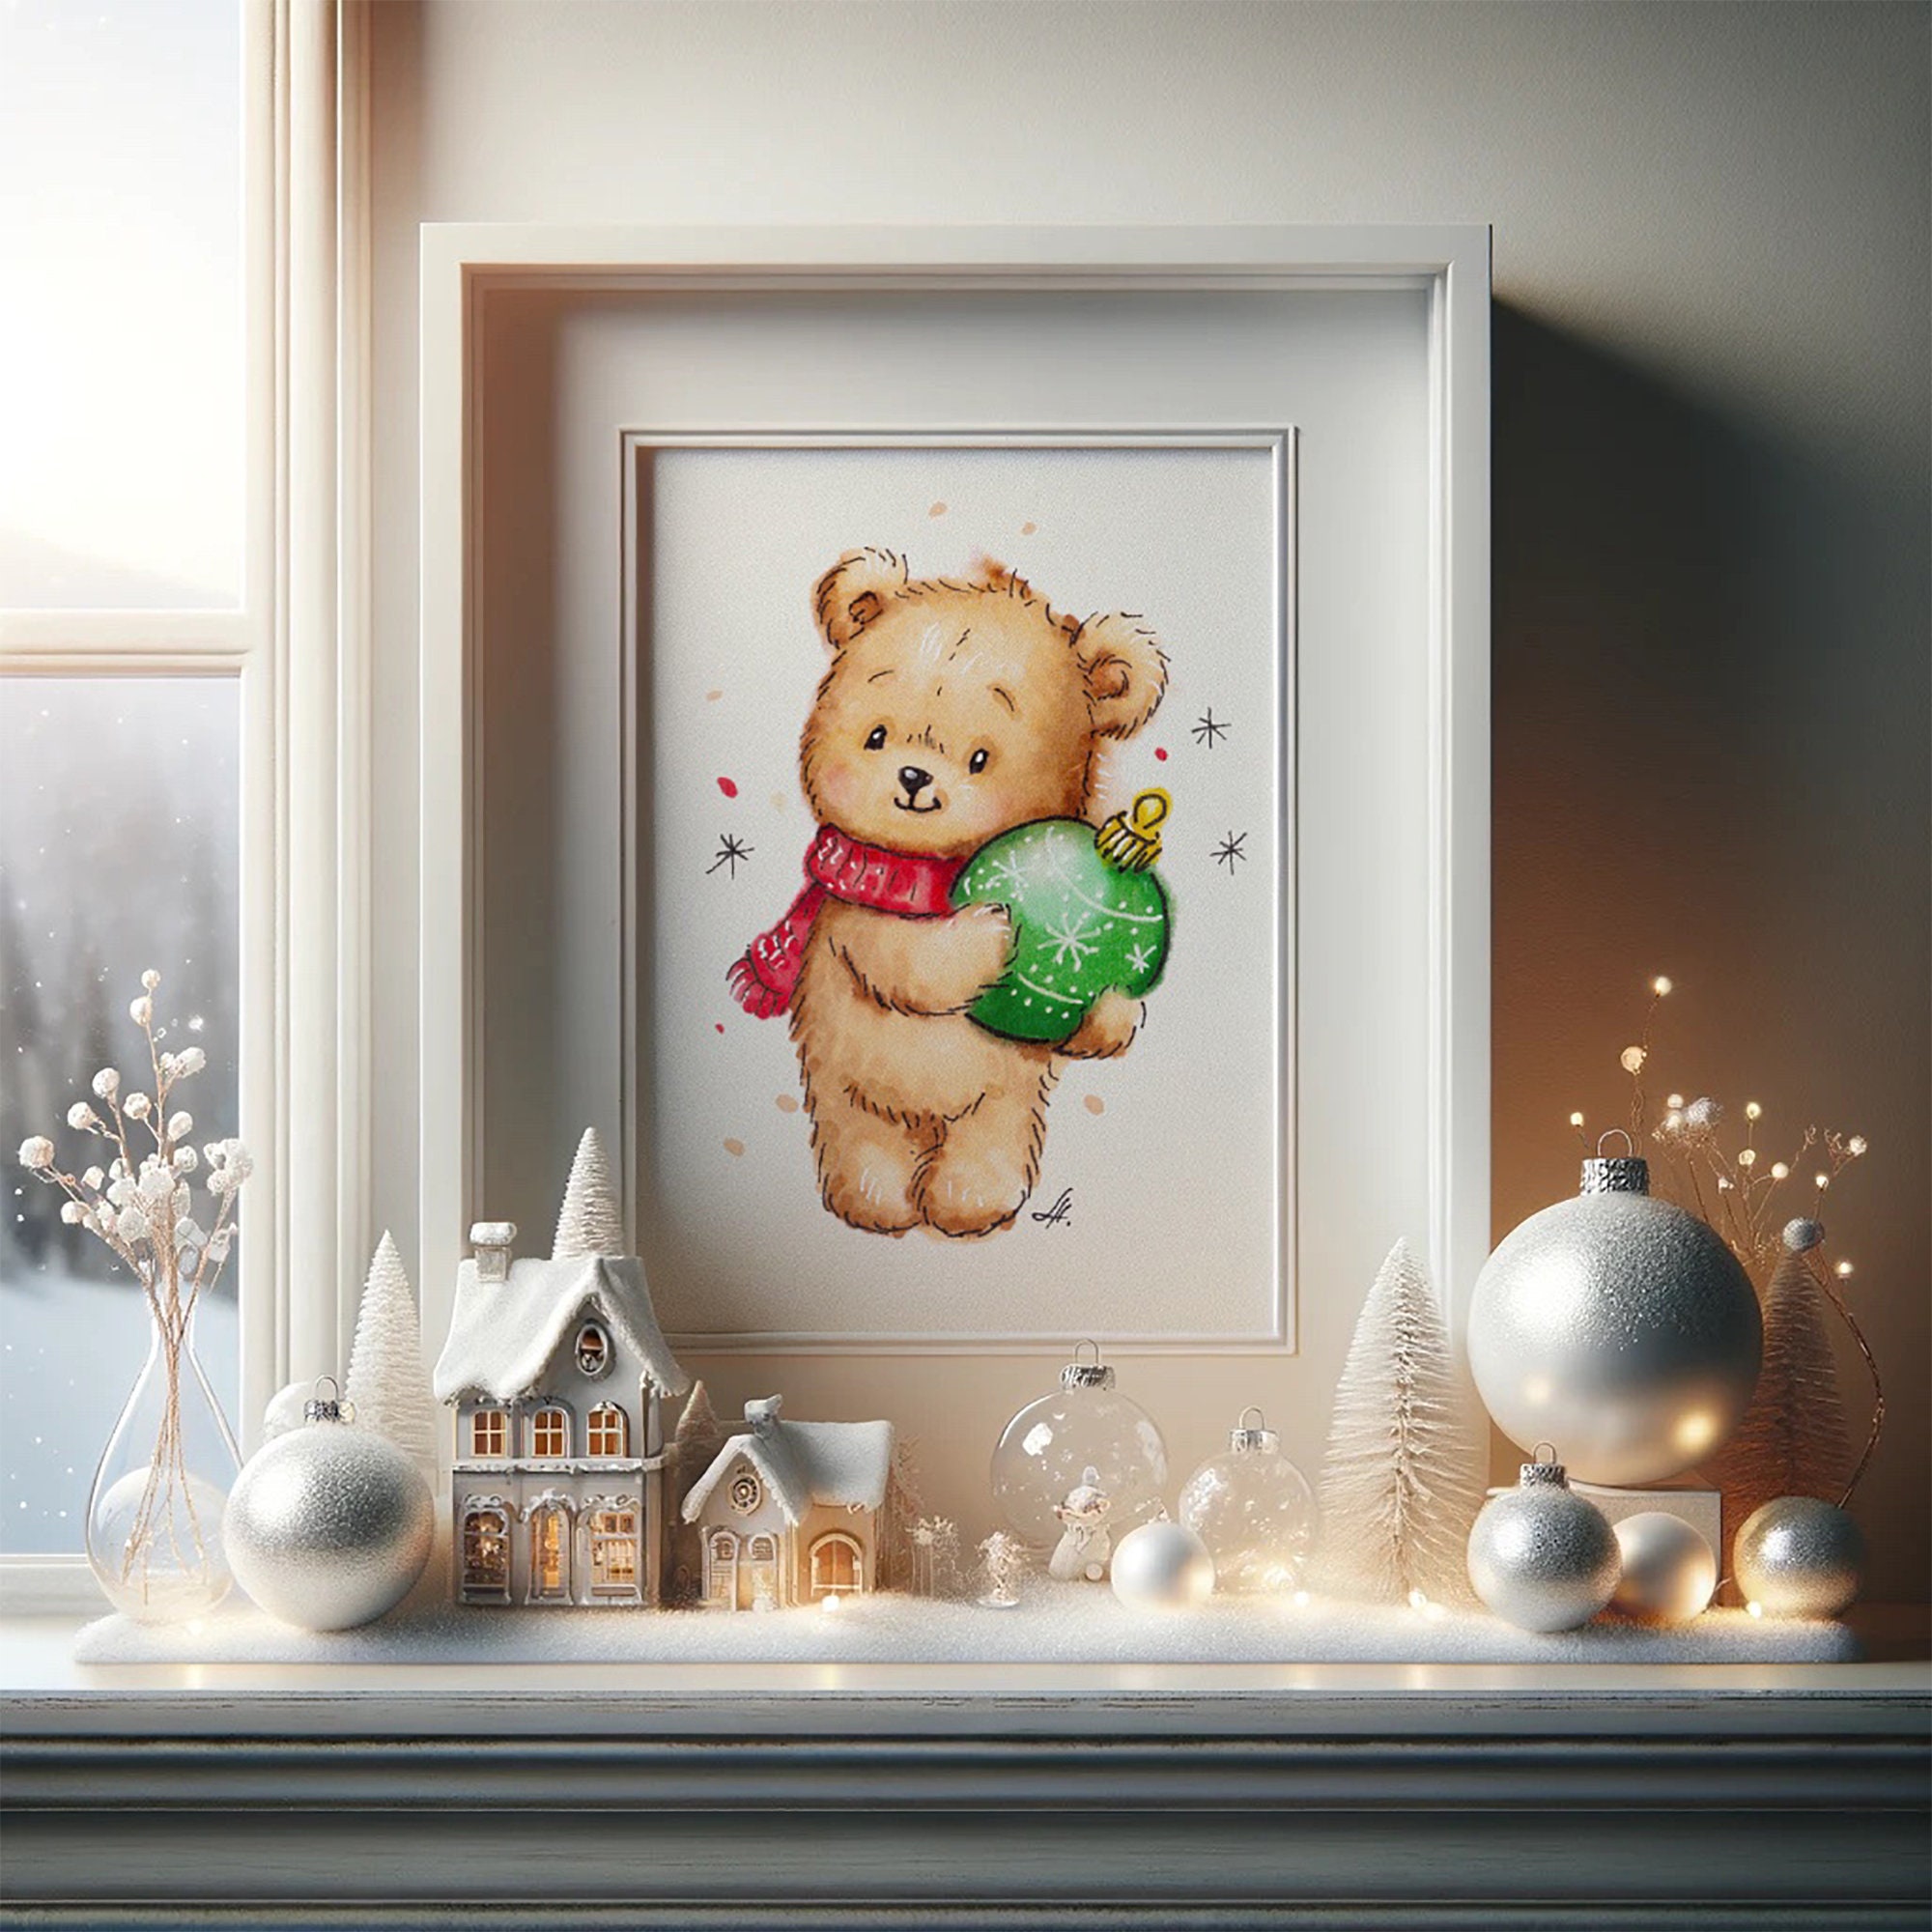 Teddy Bear With Heart Balloon Art Print by Anna Abramskaya - Fine Art  America